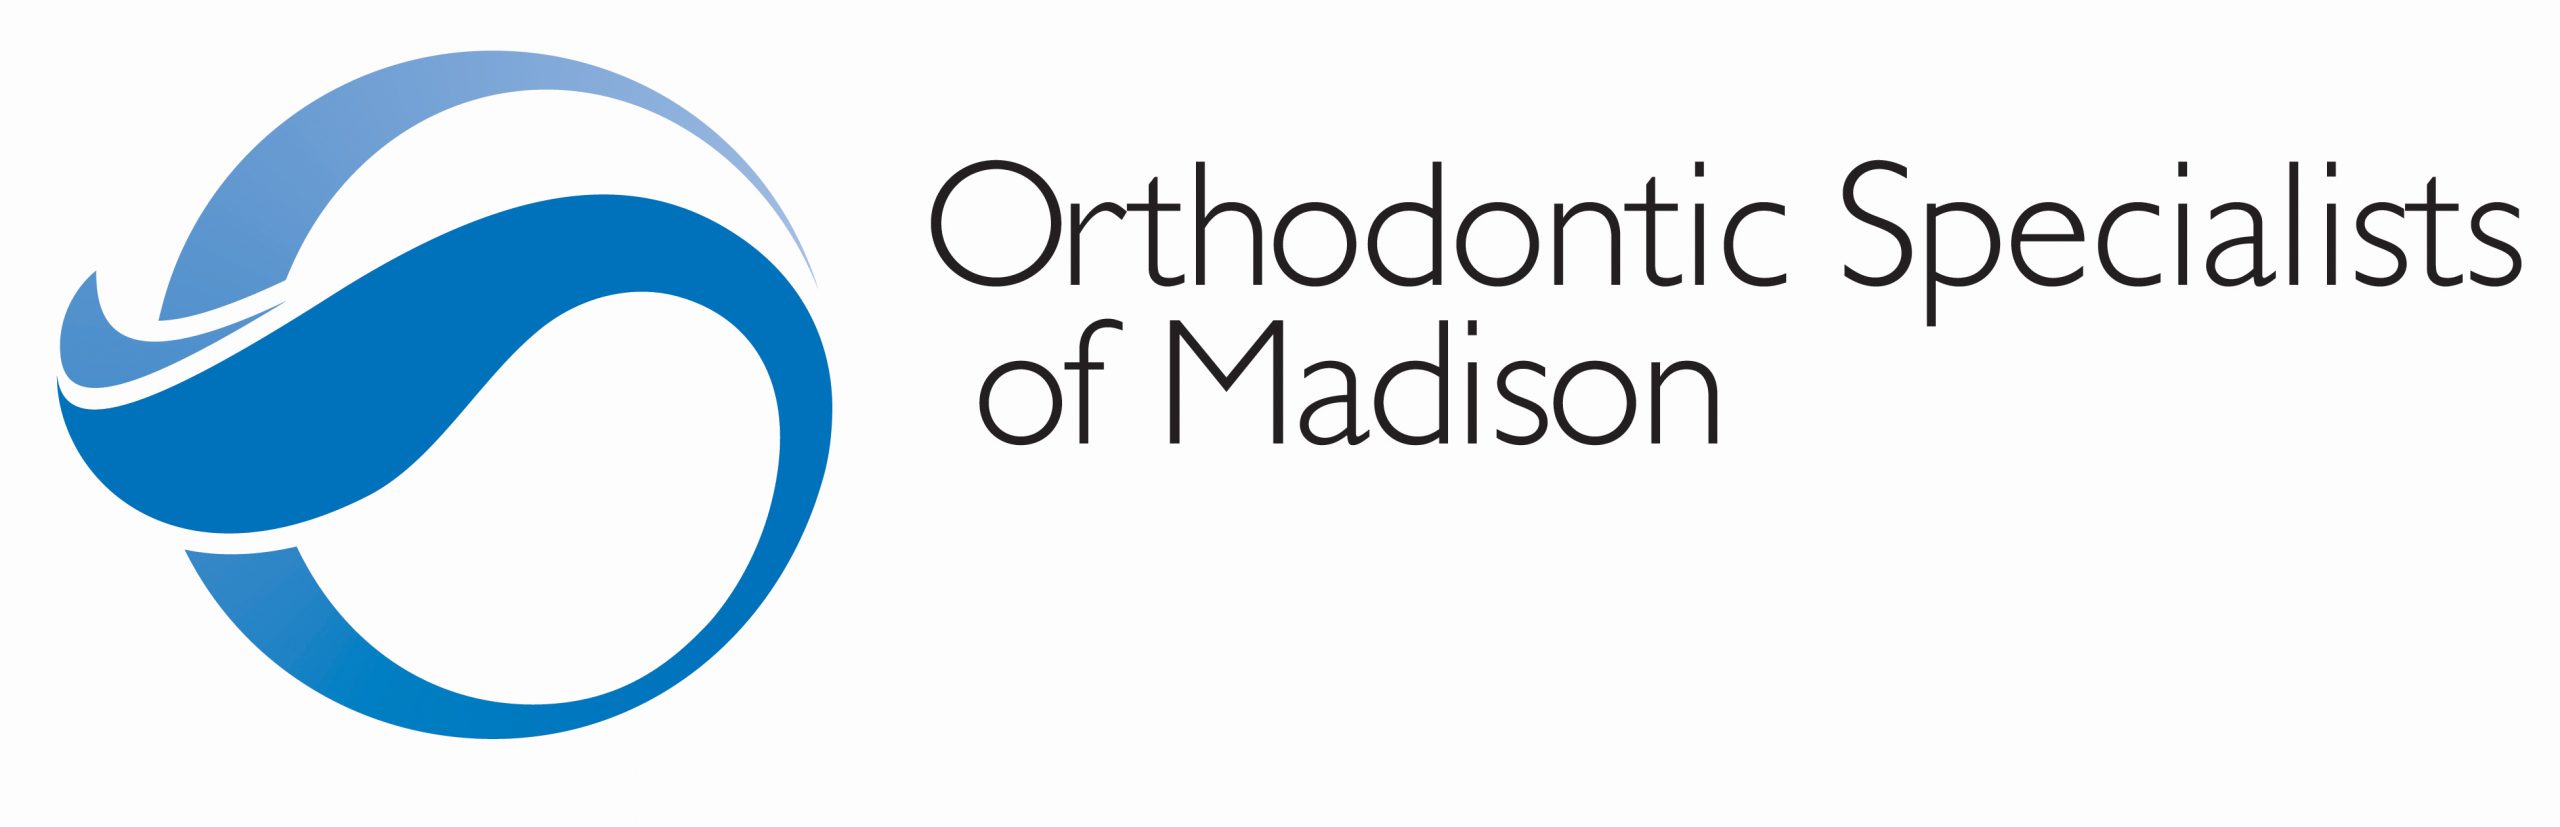 Orthodontic Specialist of Madison